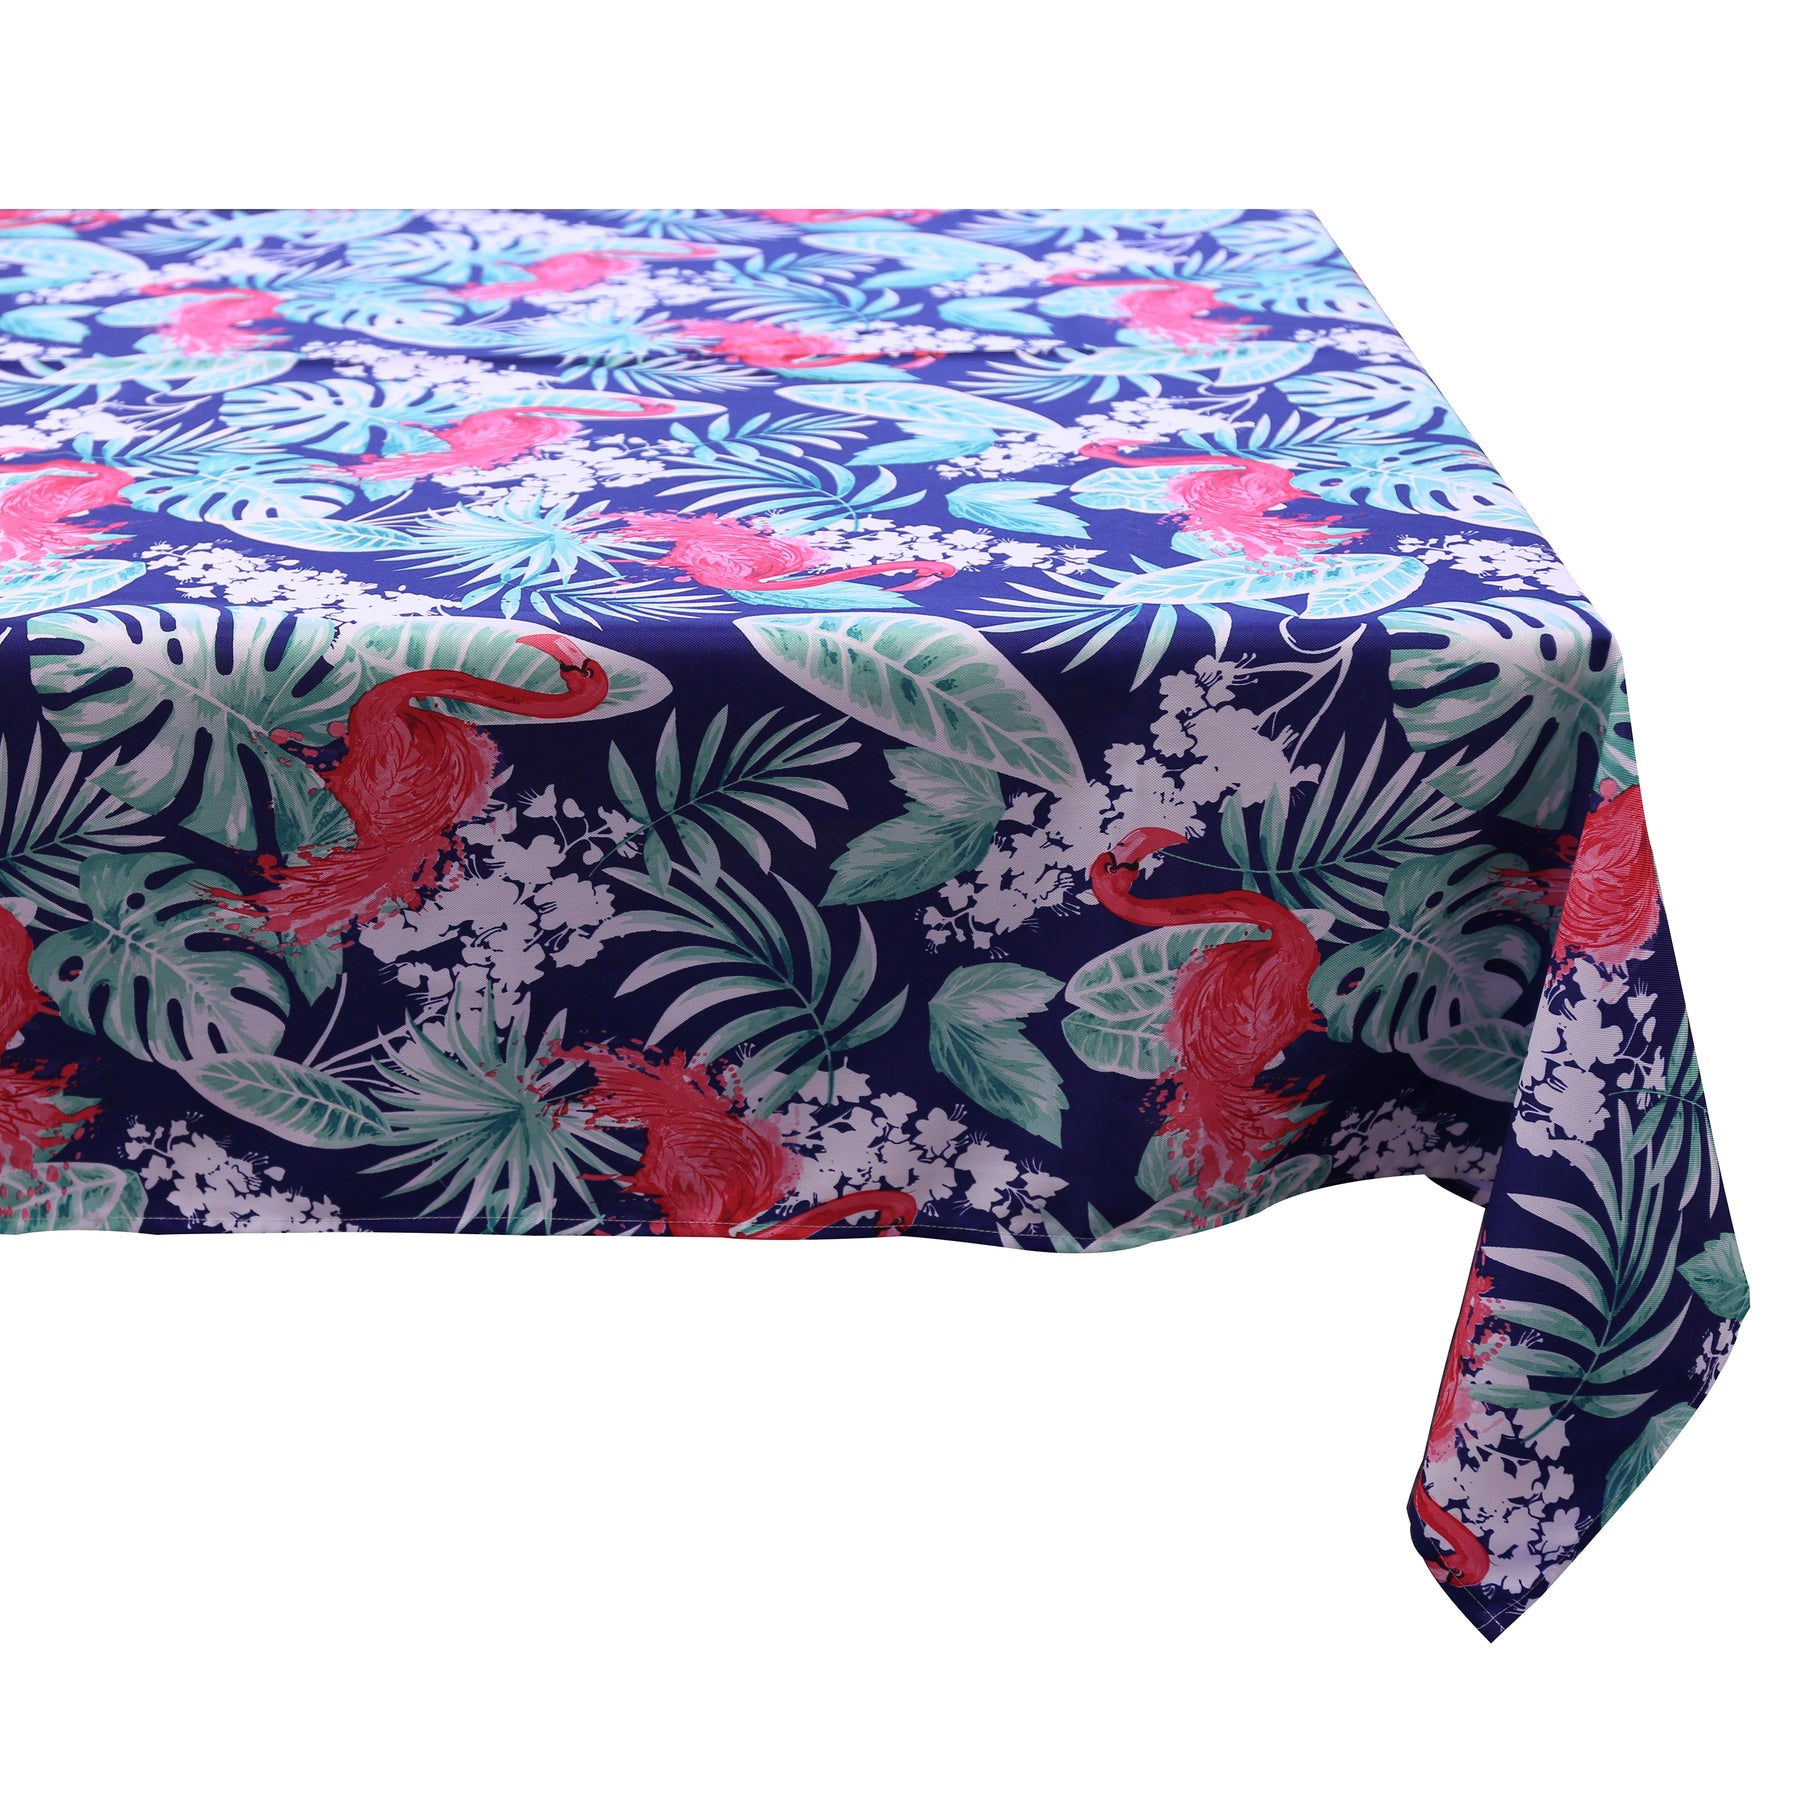 Flamingo Water Resistant Outdoor Tablecloth 152cm x 305cm Multi